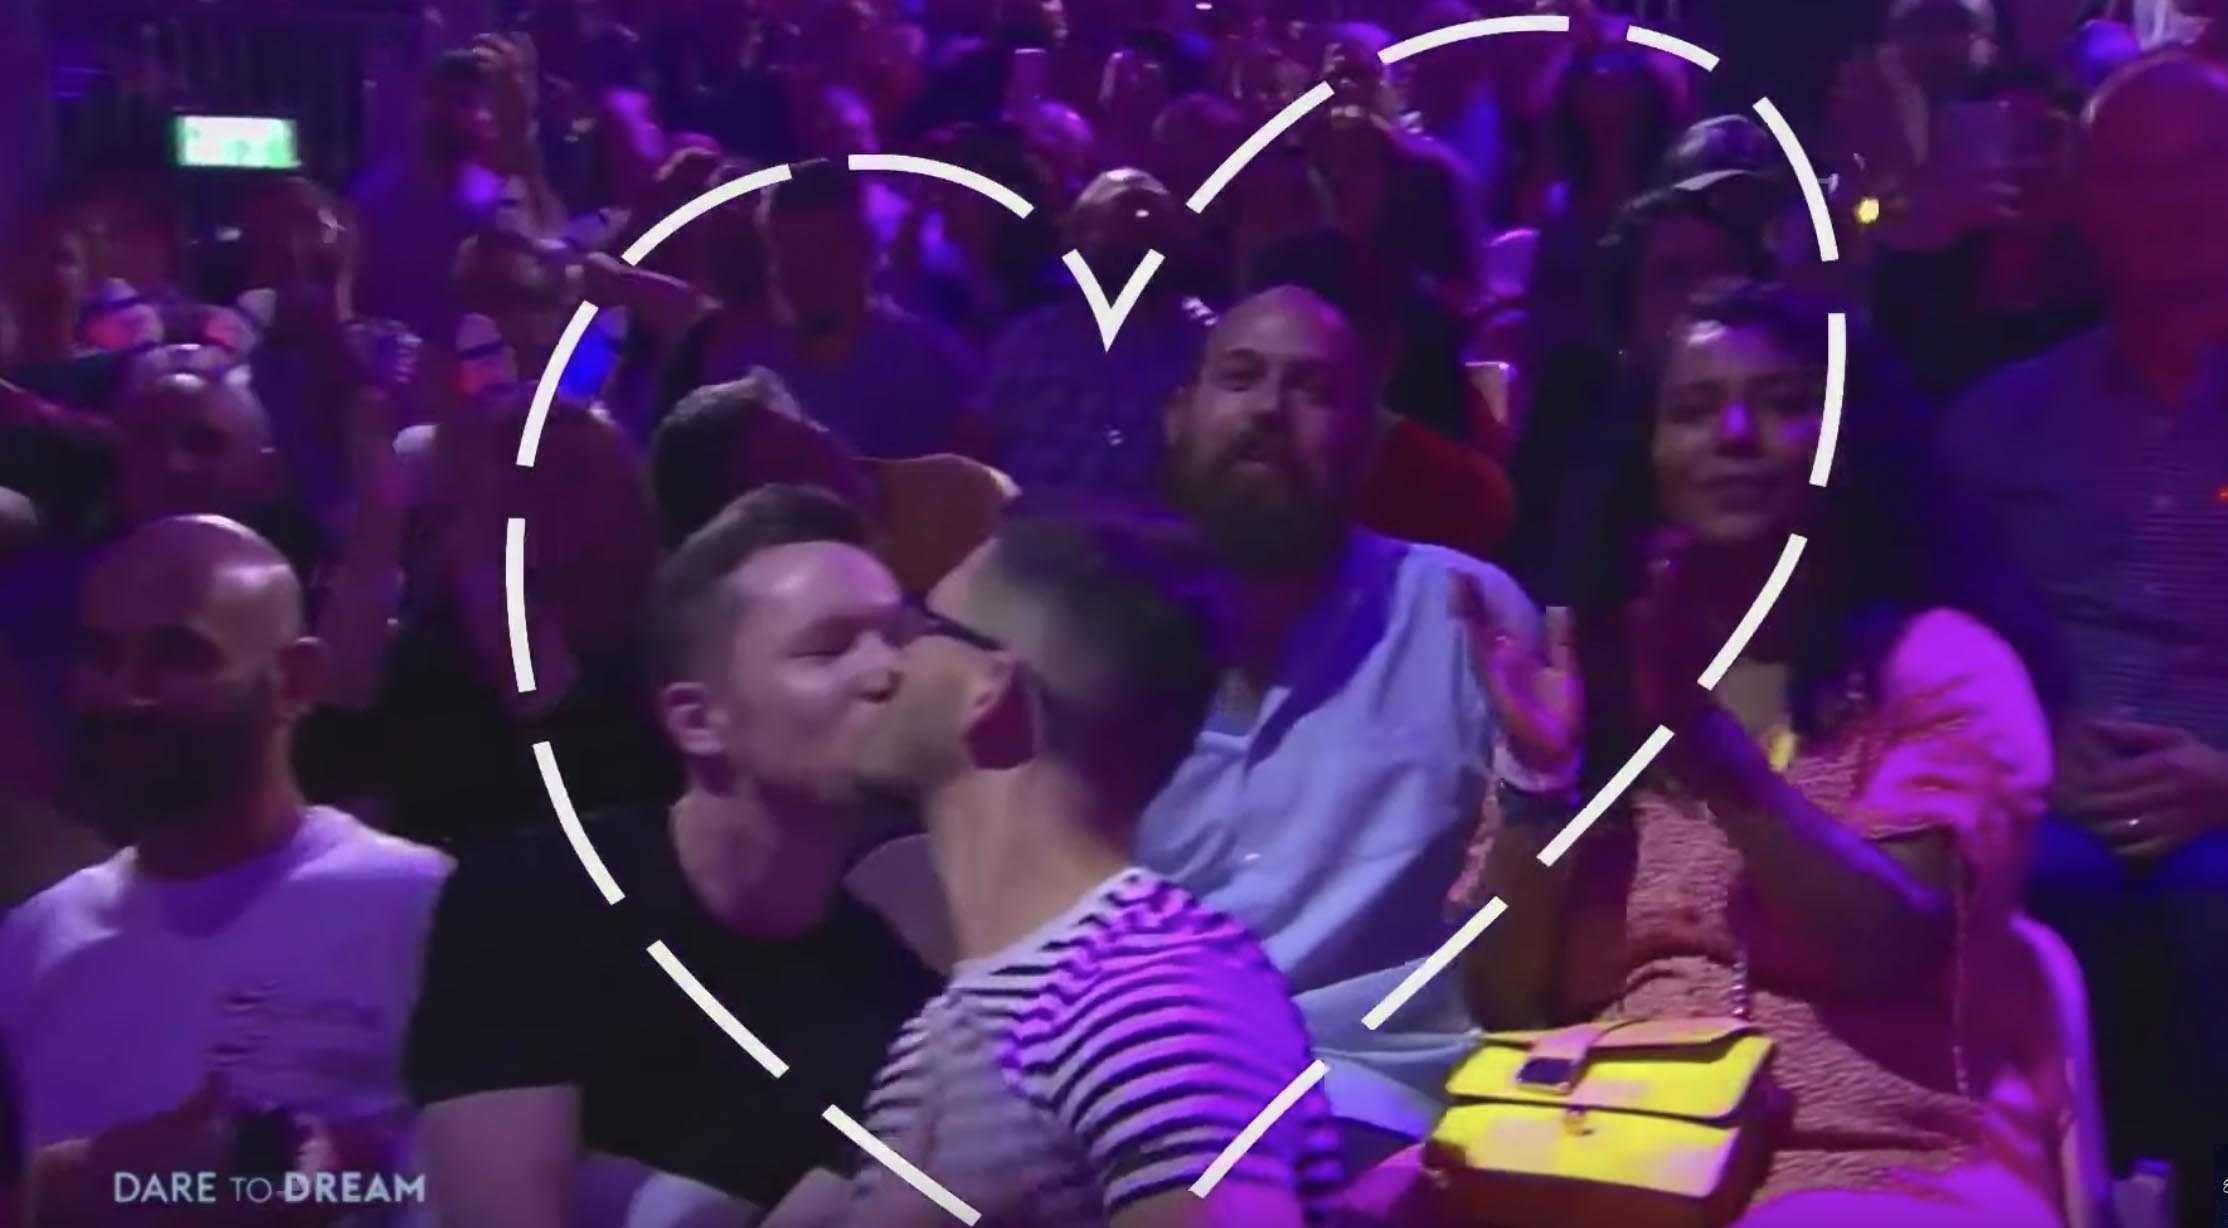 gay kiss eurovision